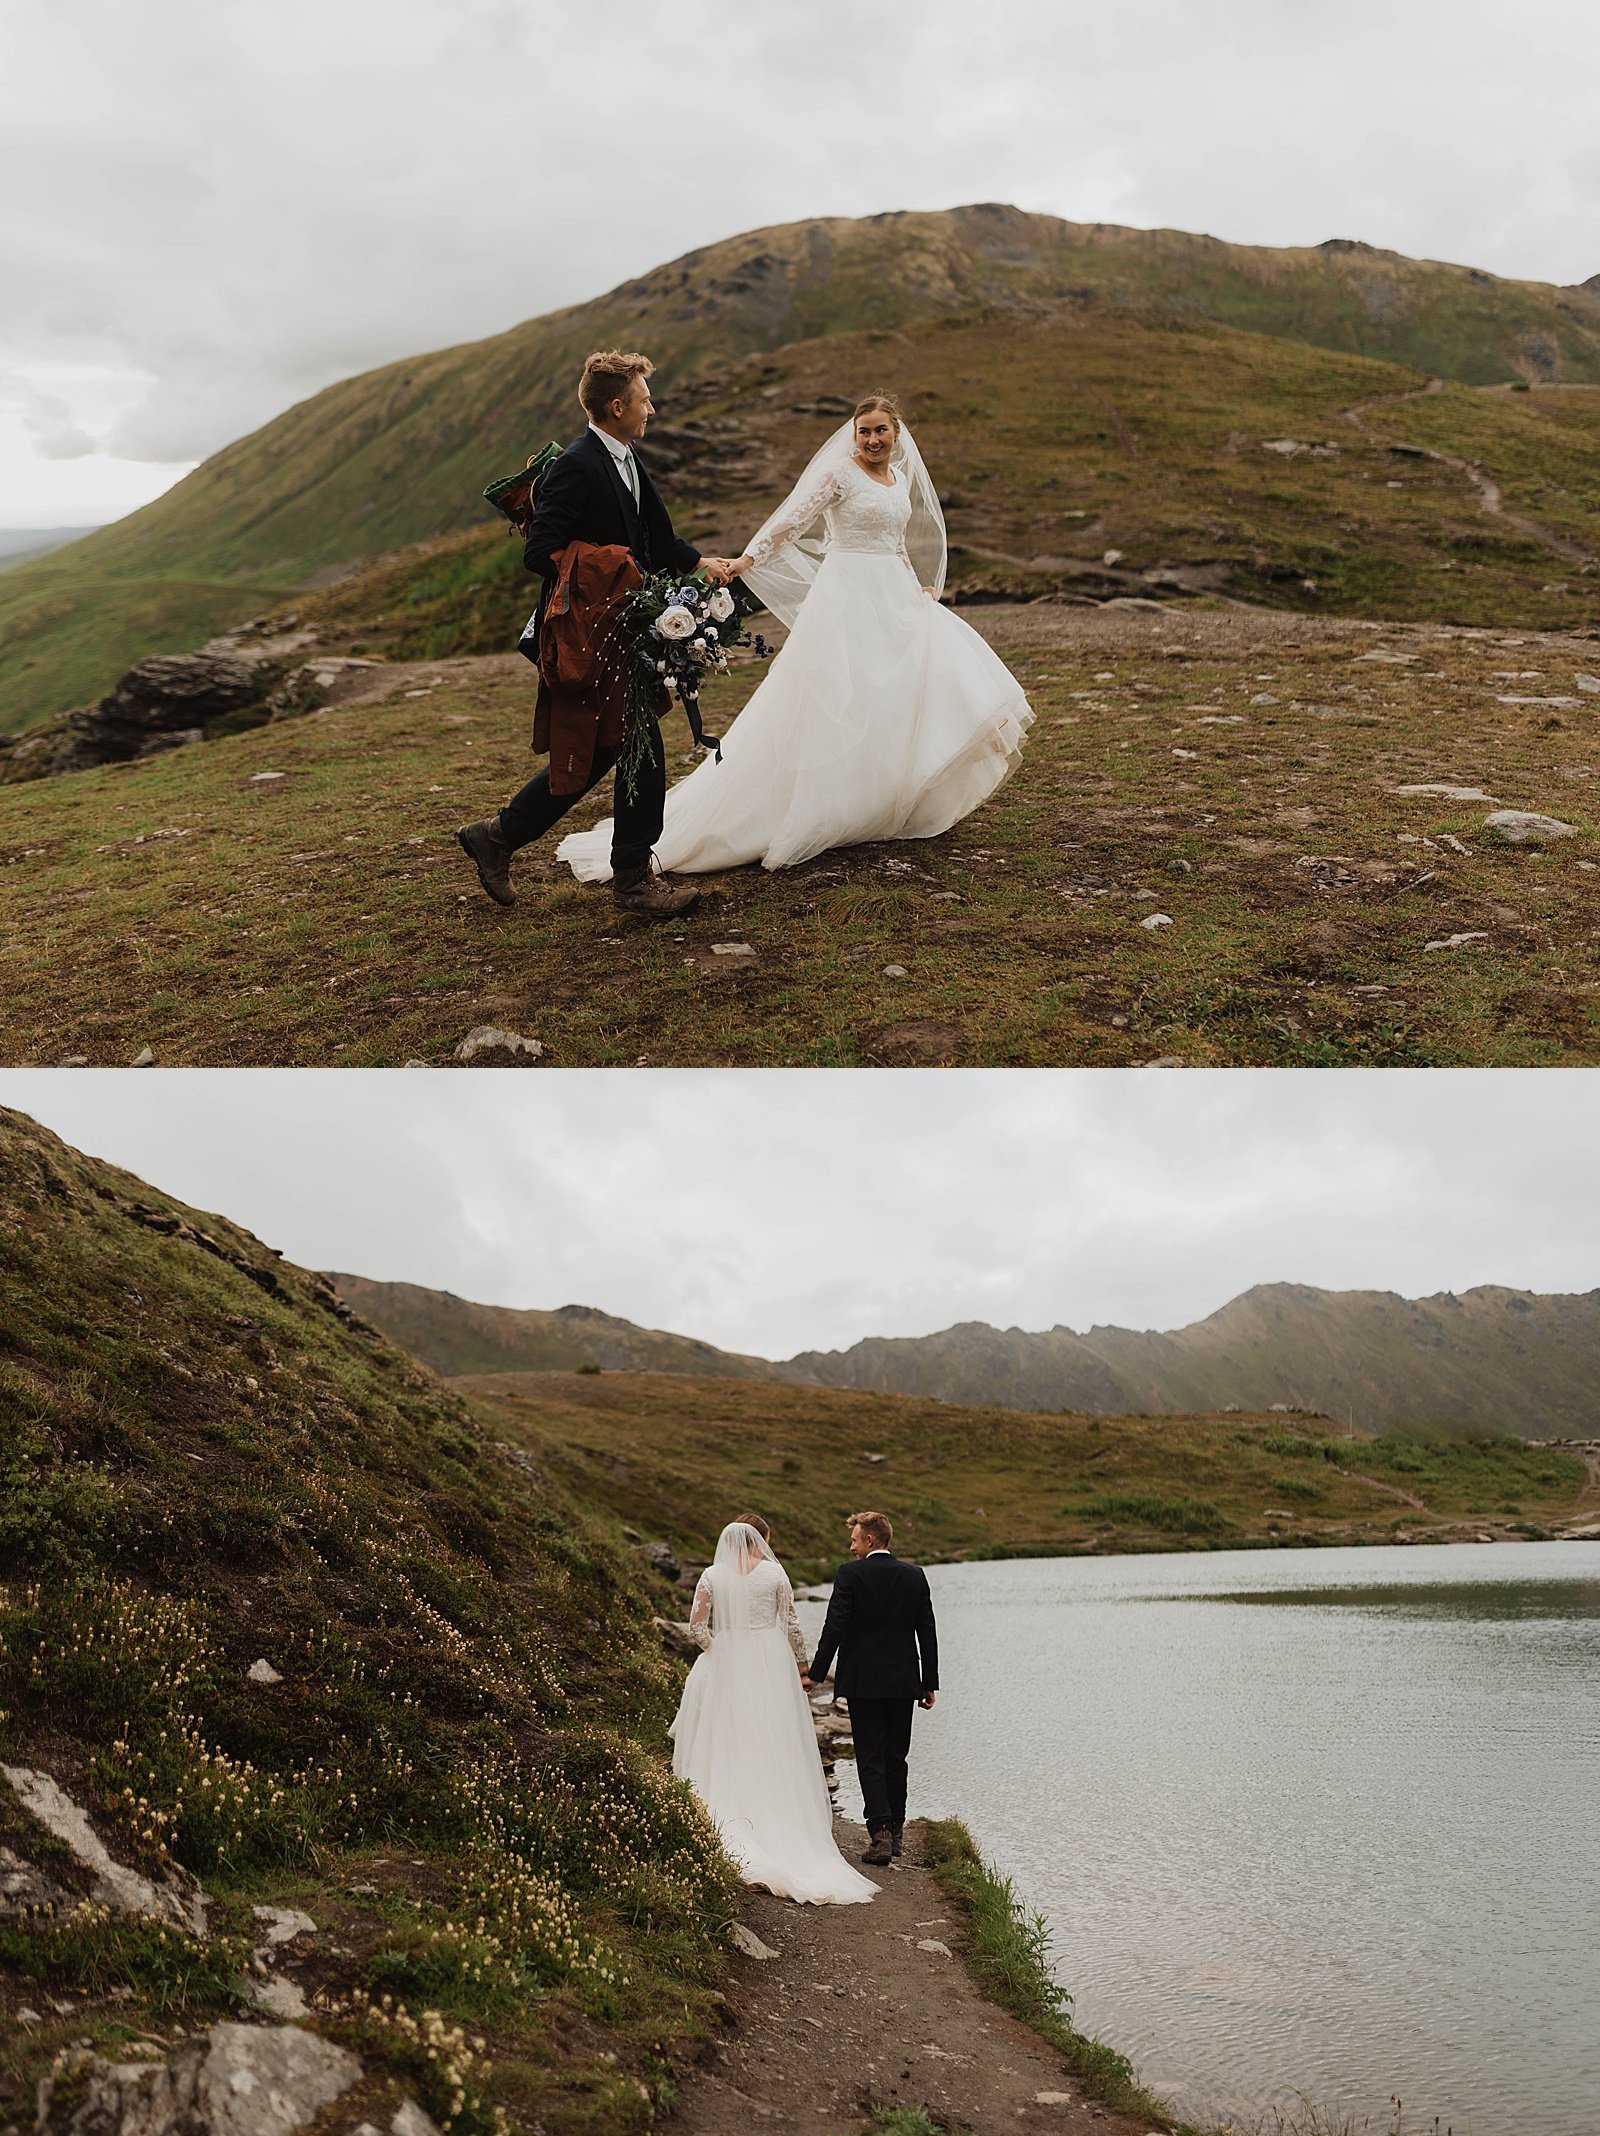  Newlyweds running across a field on an Alaskan mountain by Anchorage wedding photographer Theresa McDonald 